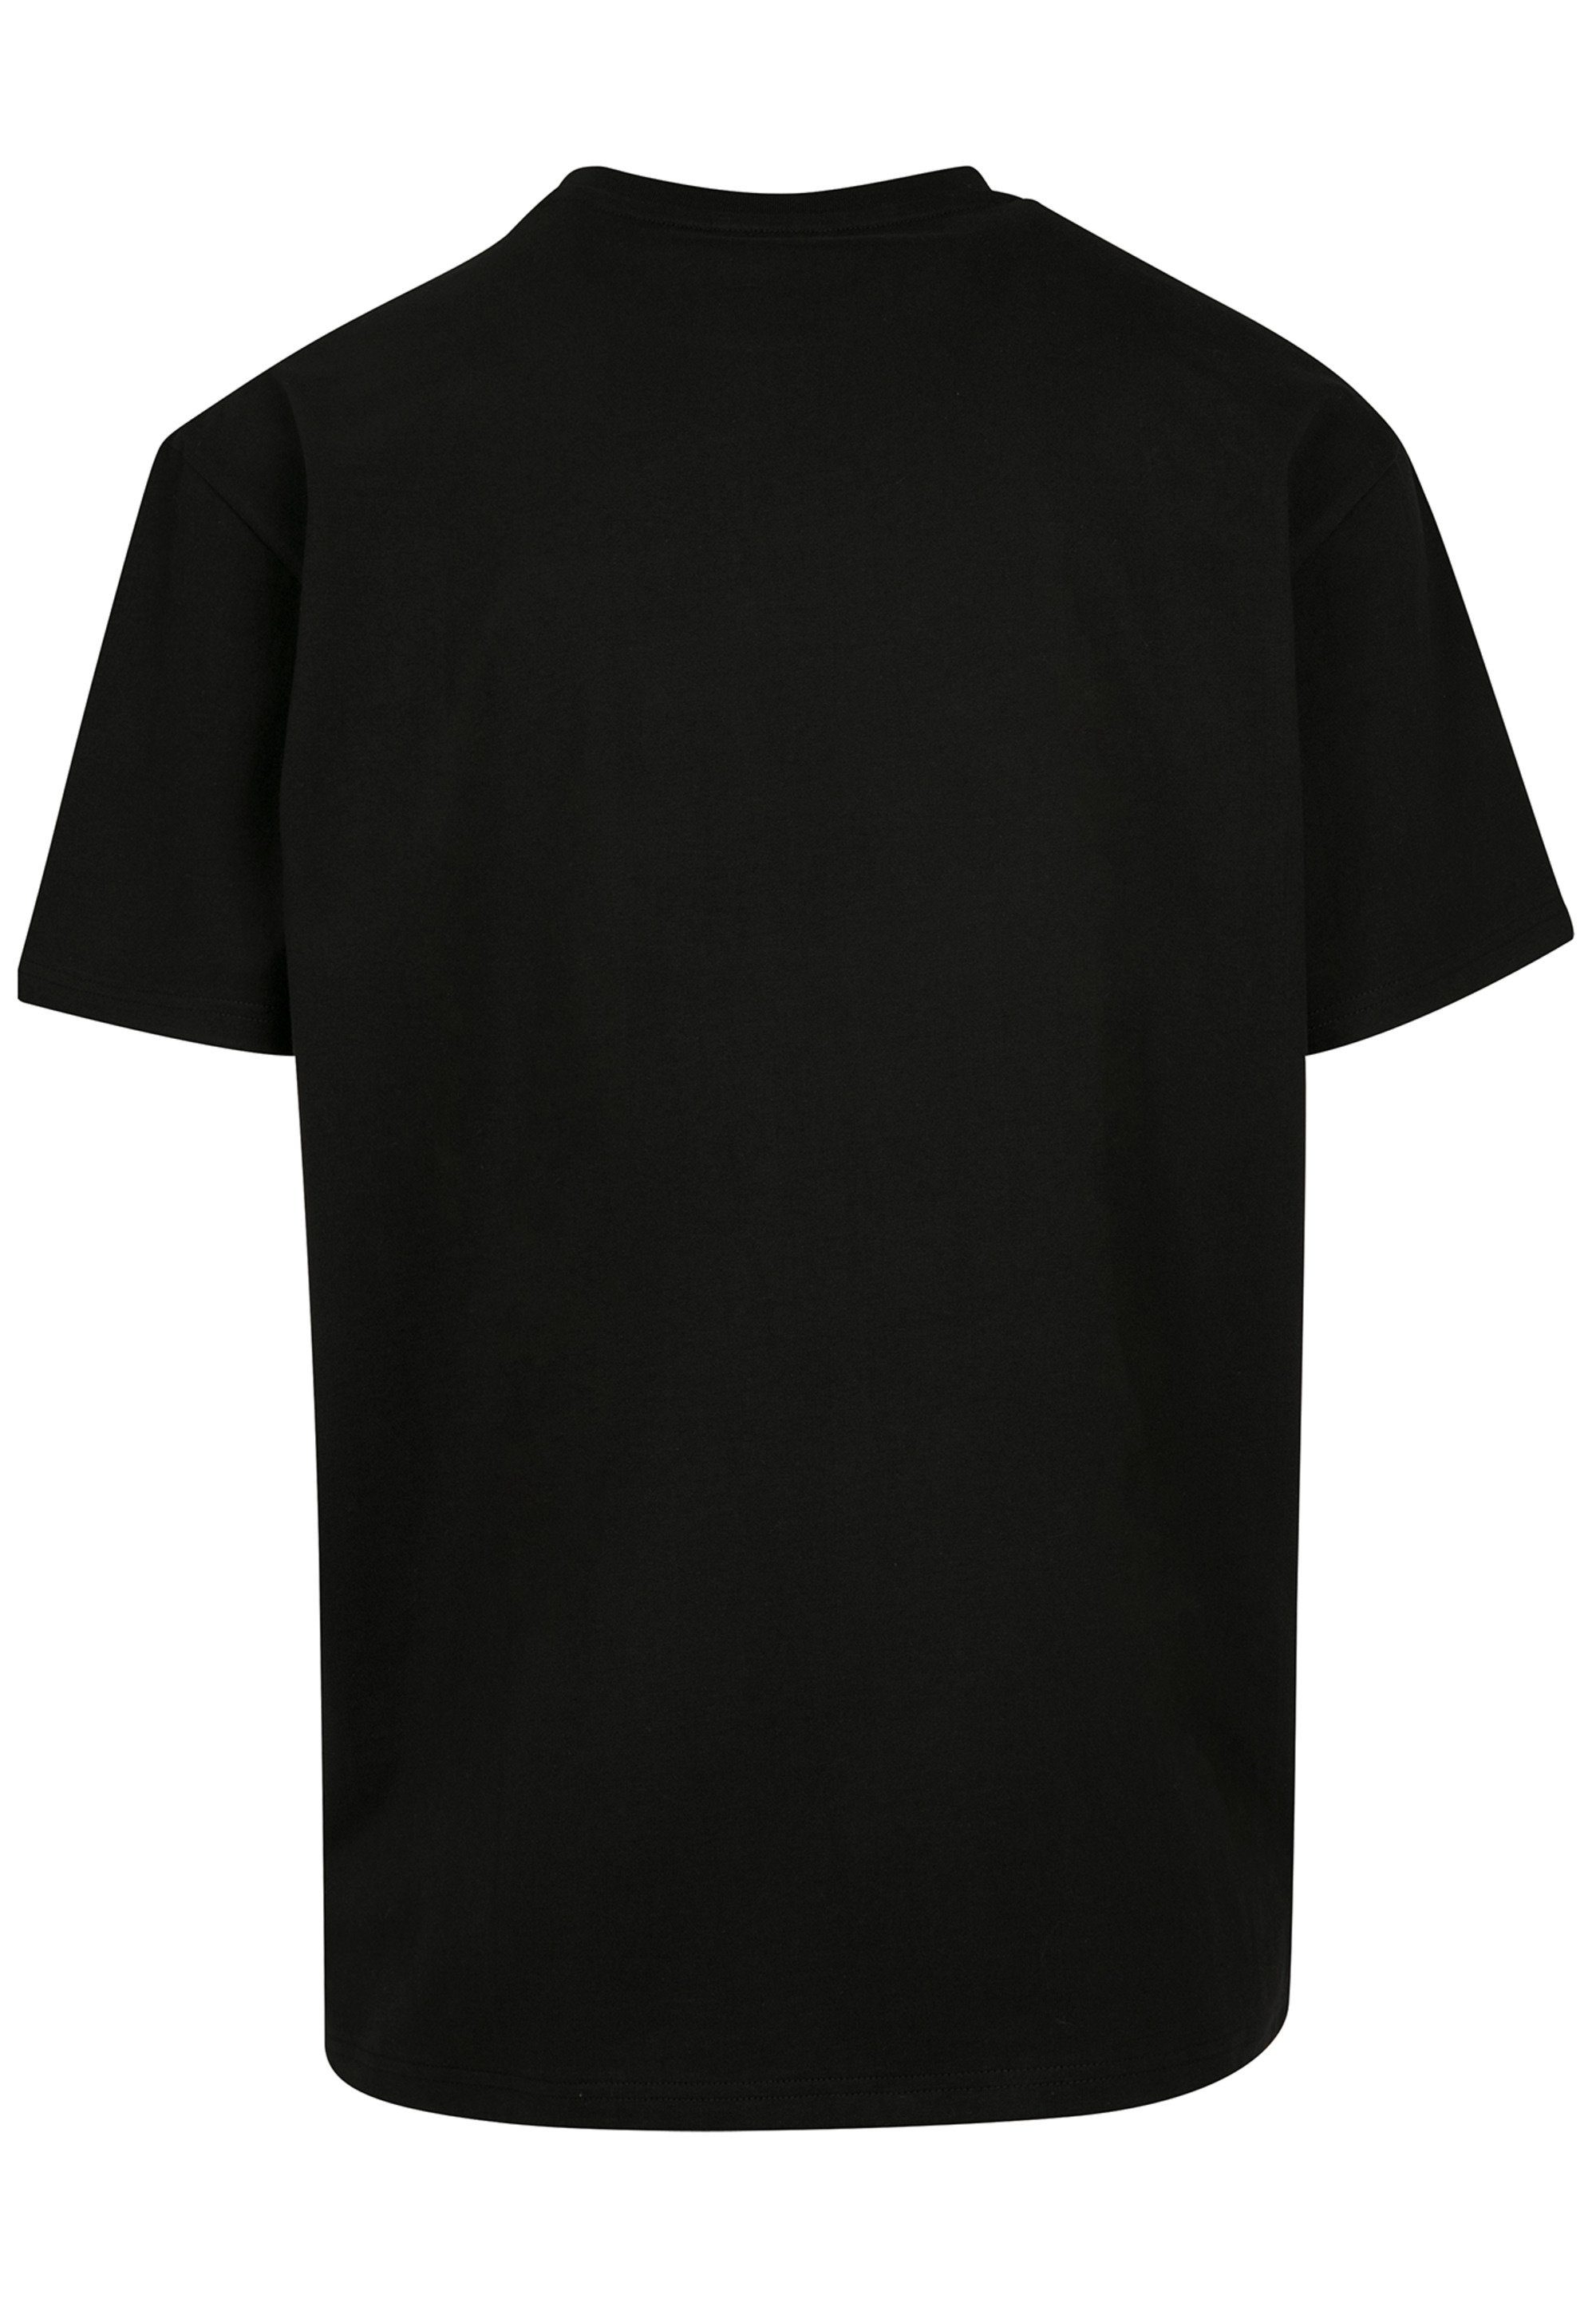 F4NT4STIC T-Shirt SELF CARE OVERSIZE schwarz Print TEE